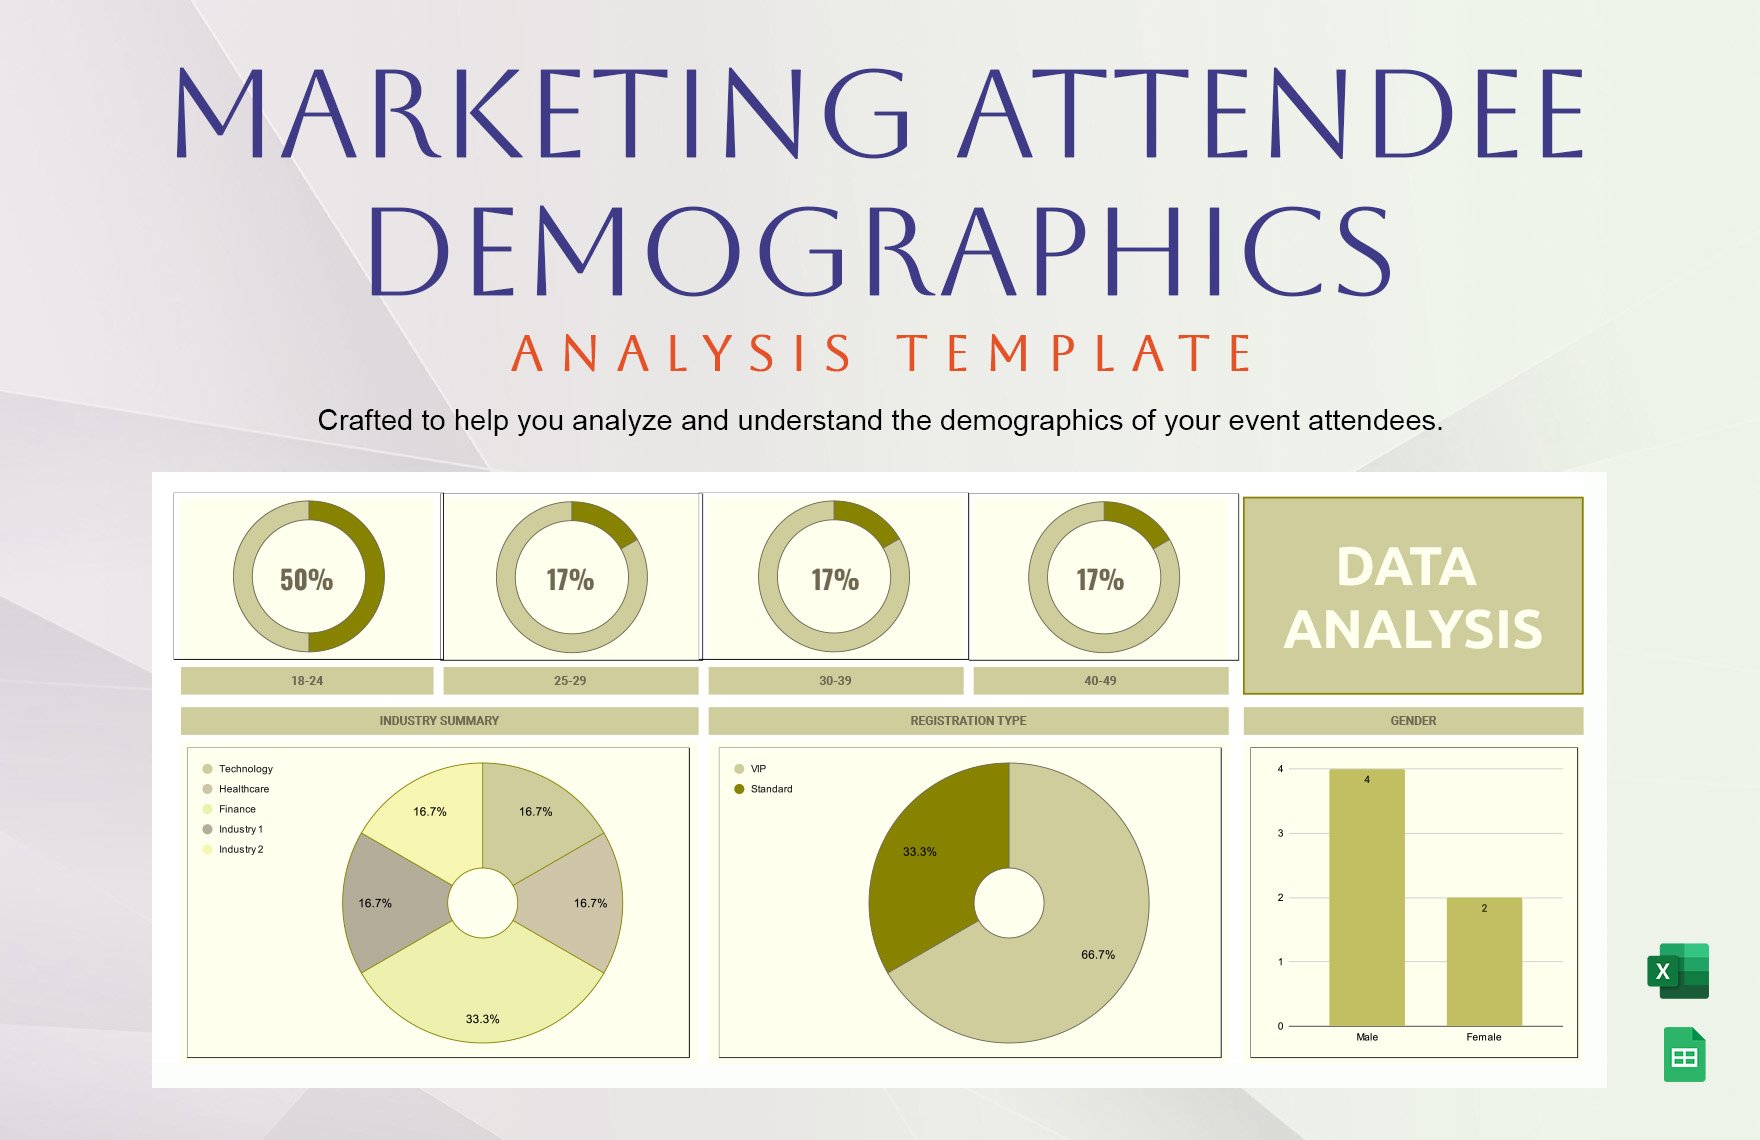 Marketing Attendee Demographics Analysis Template